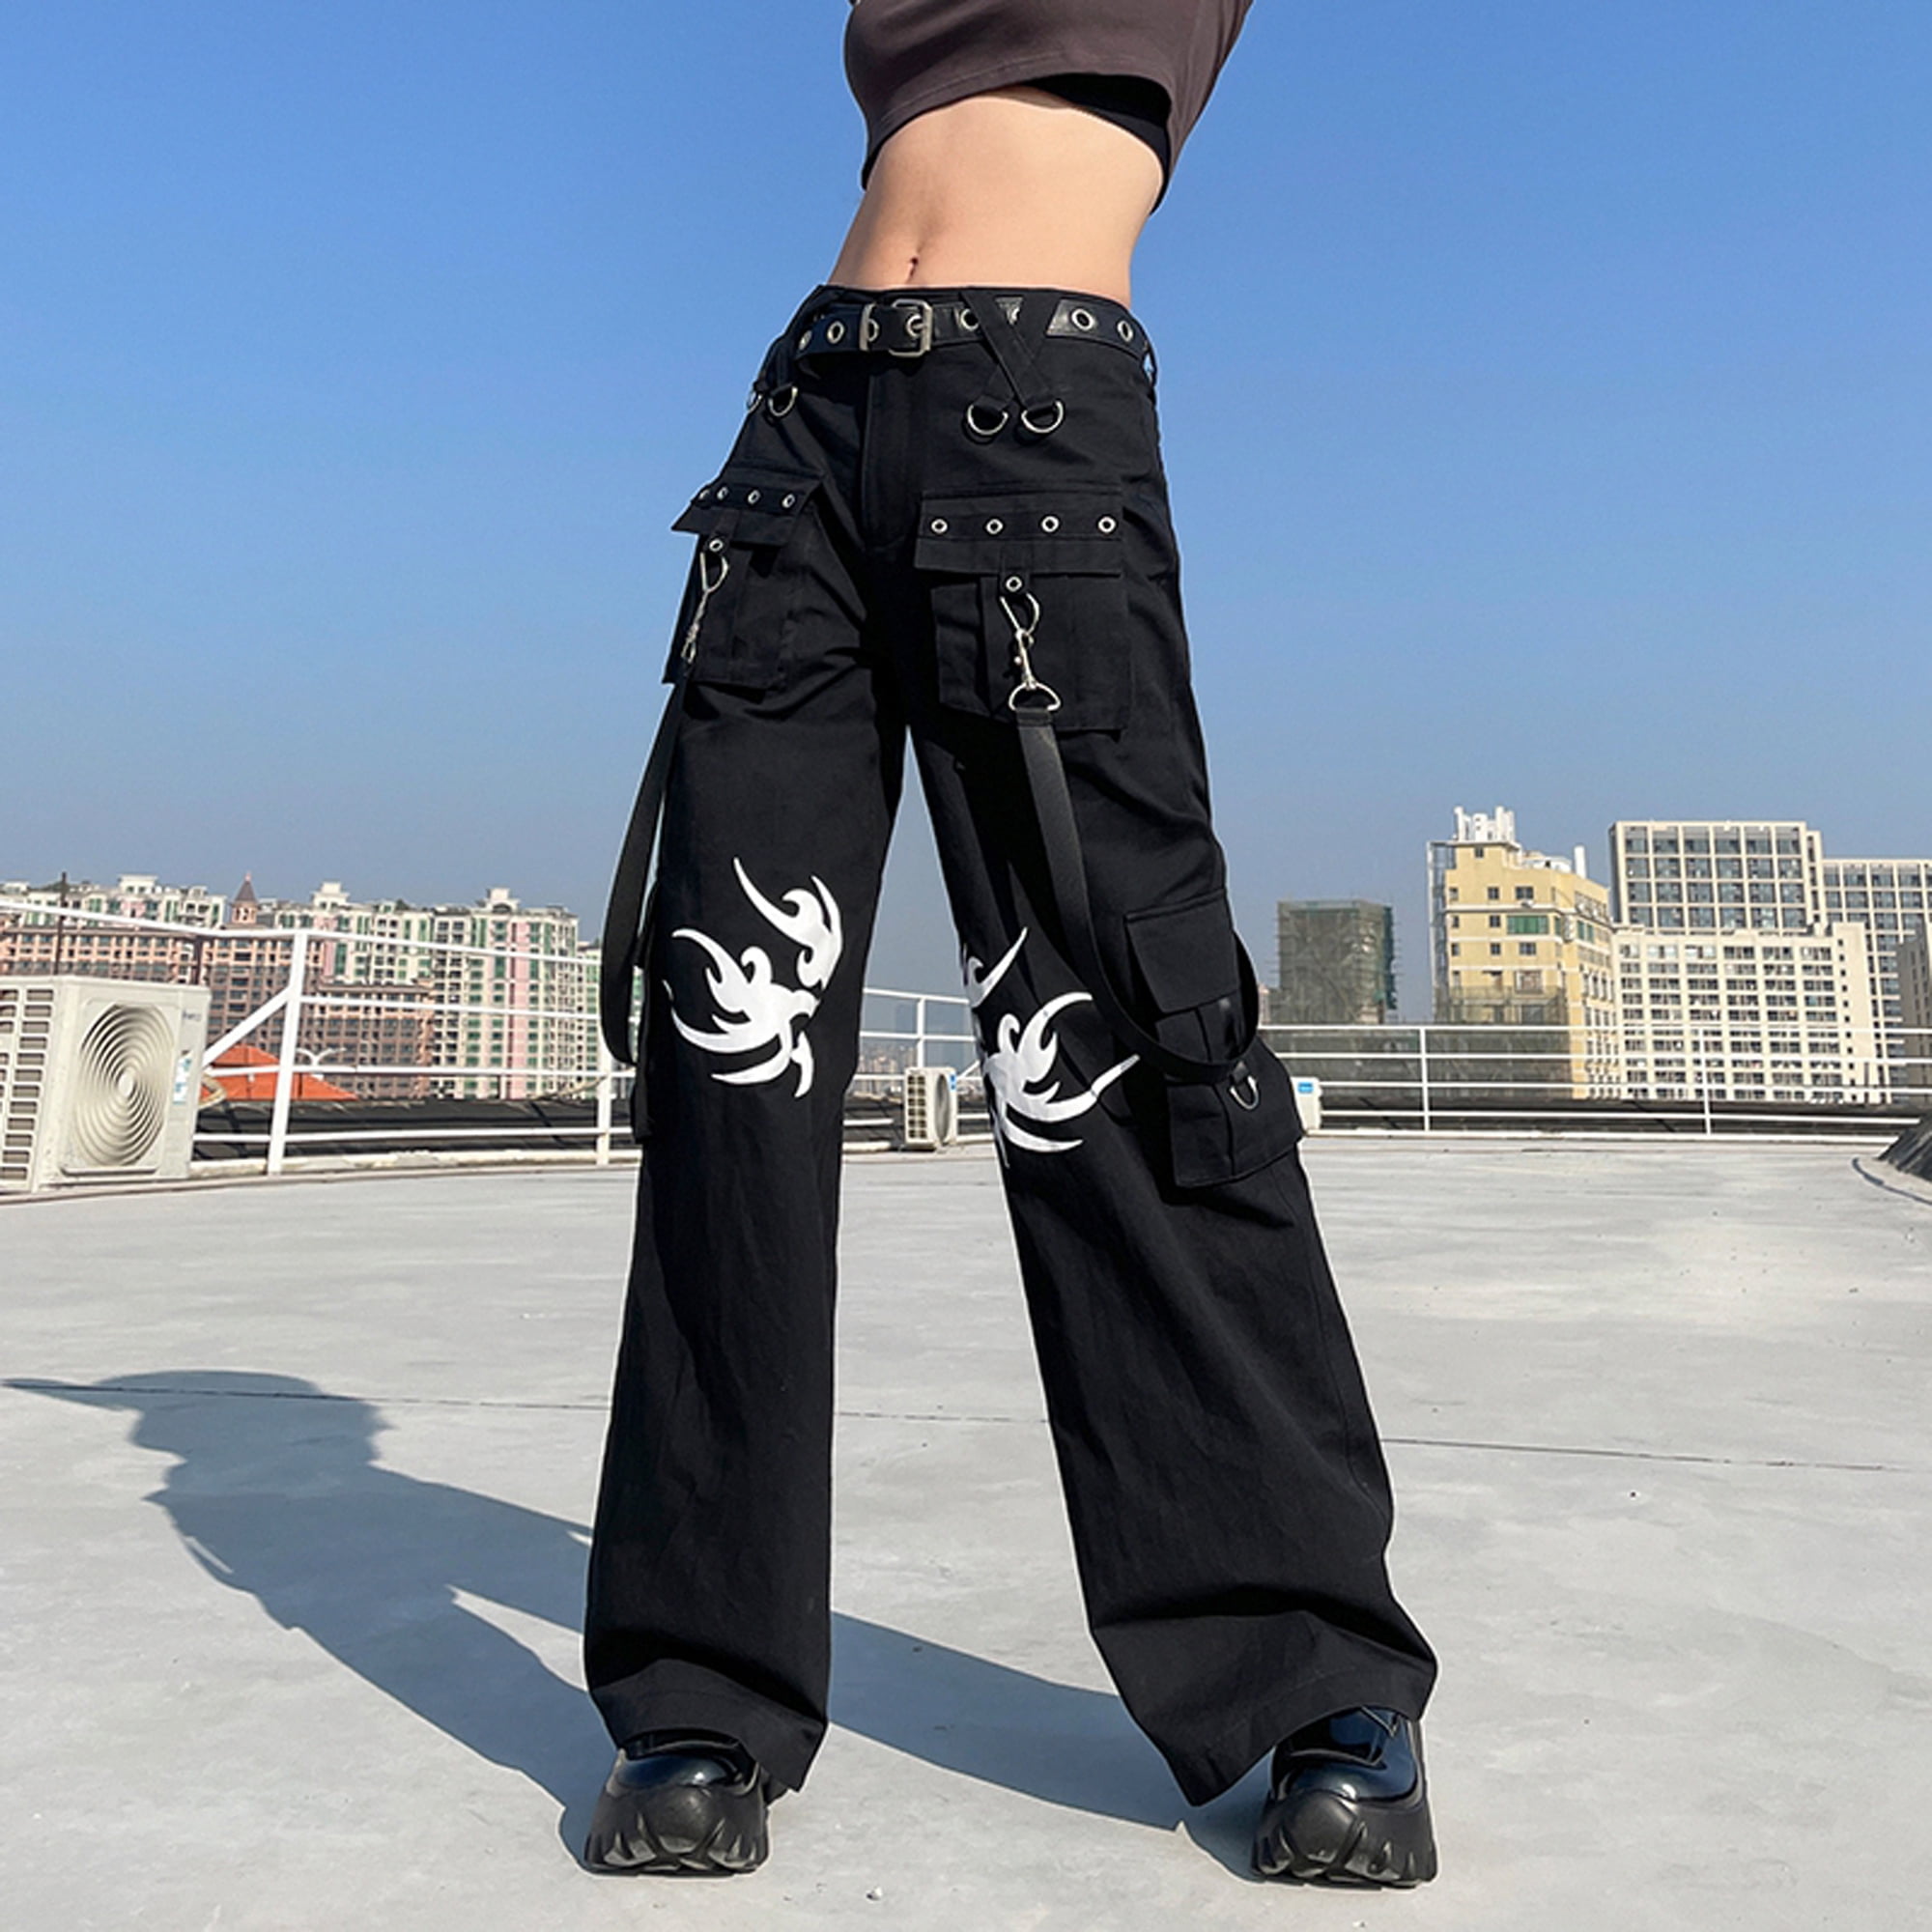 Buy DOSLAVIDA Mens Baggy Hip Hop Jeans Loose Fit Jogger Denim Pants  Stylish Printed Dance Skateboard Cargo Jean with Pockets Iblue XSmall  at Amazonin